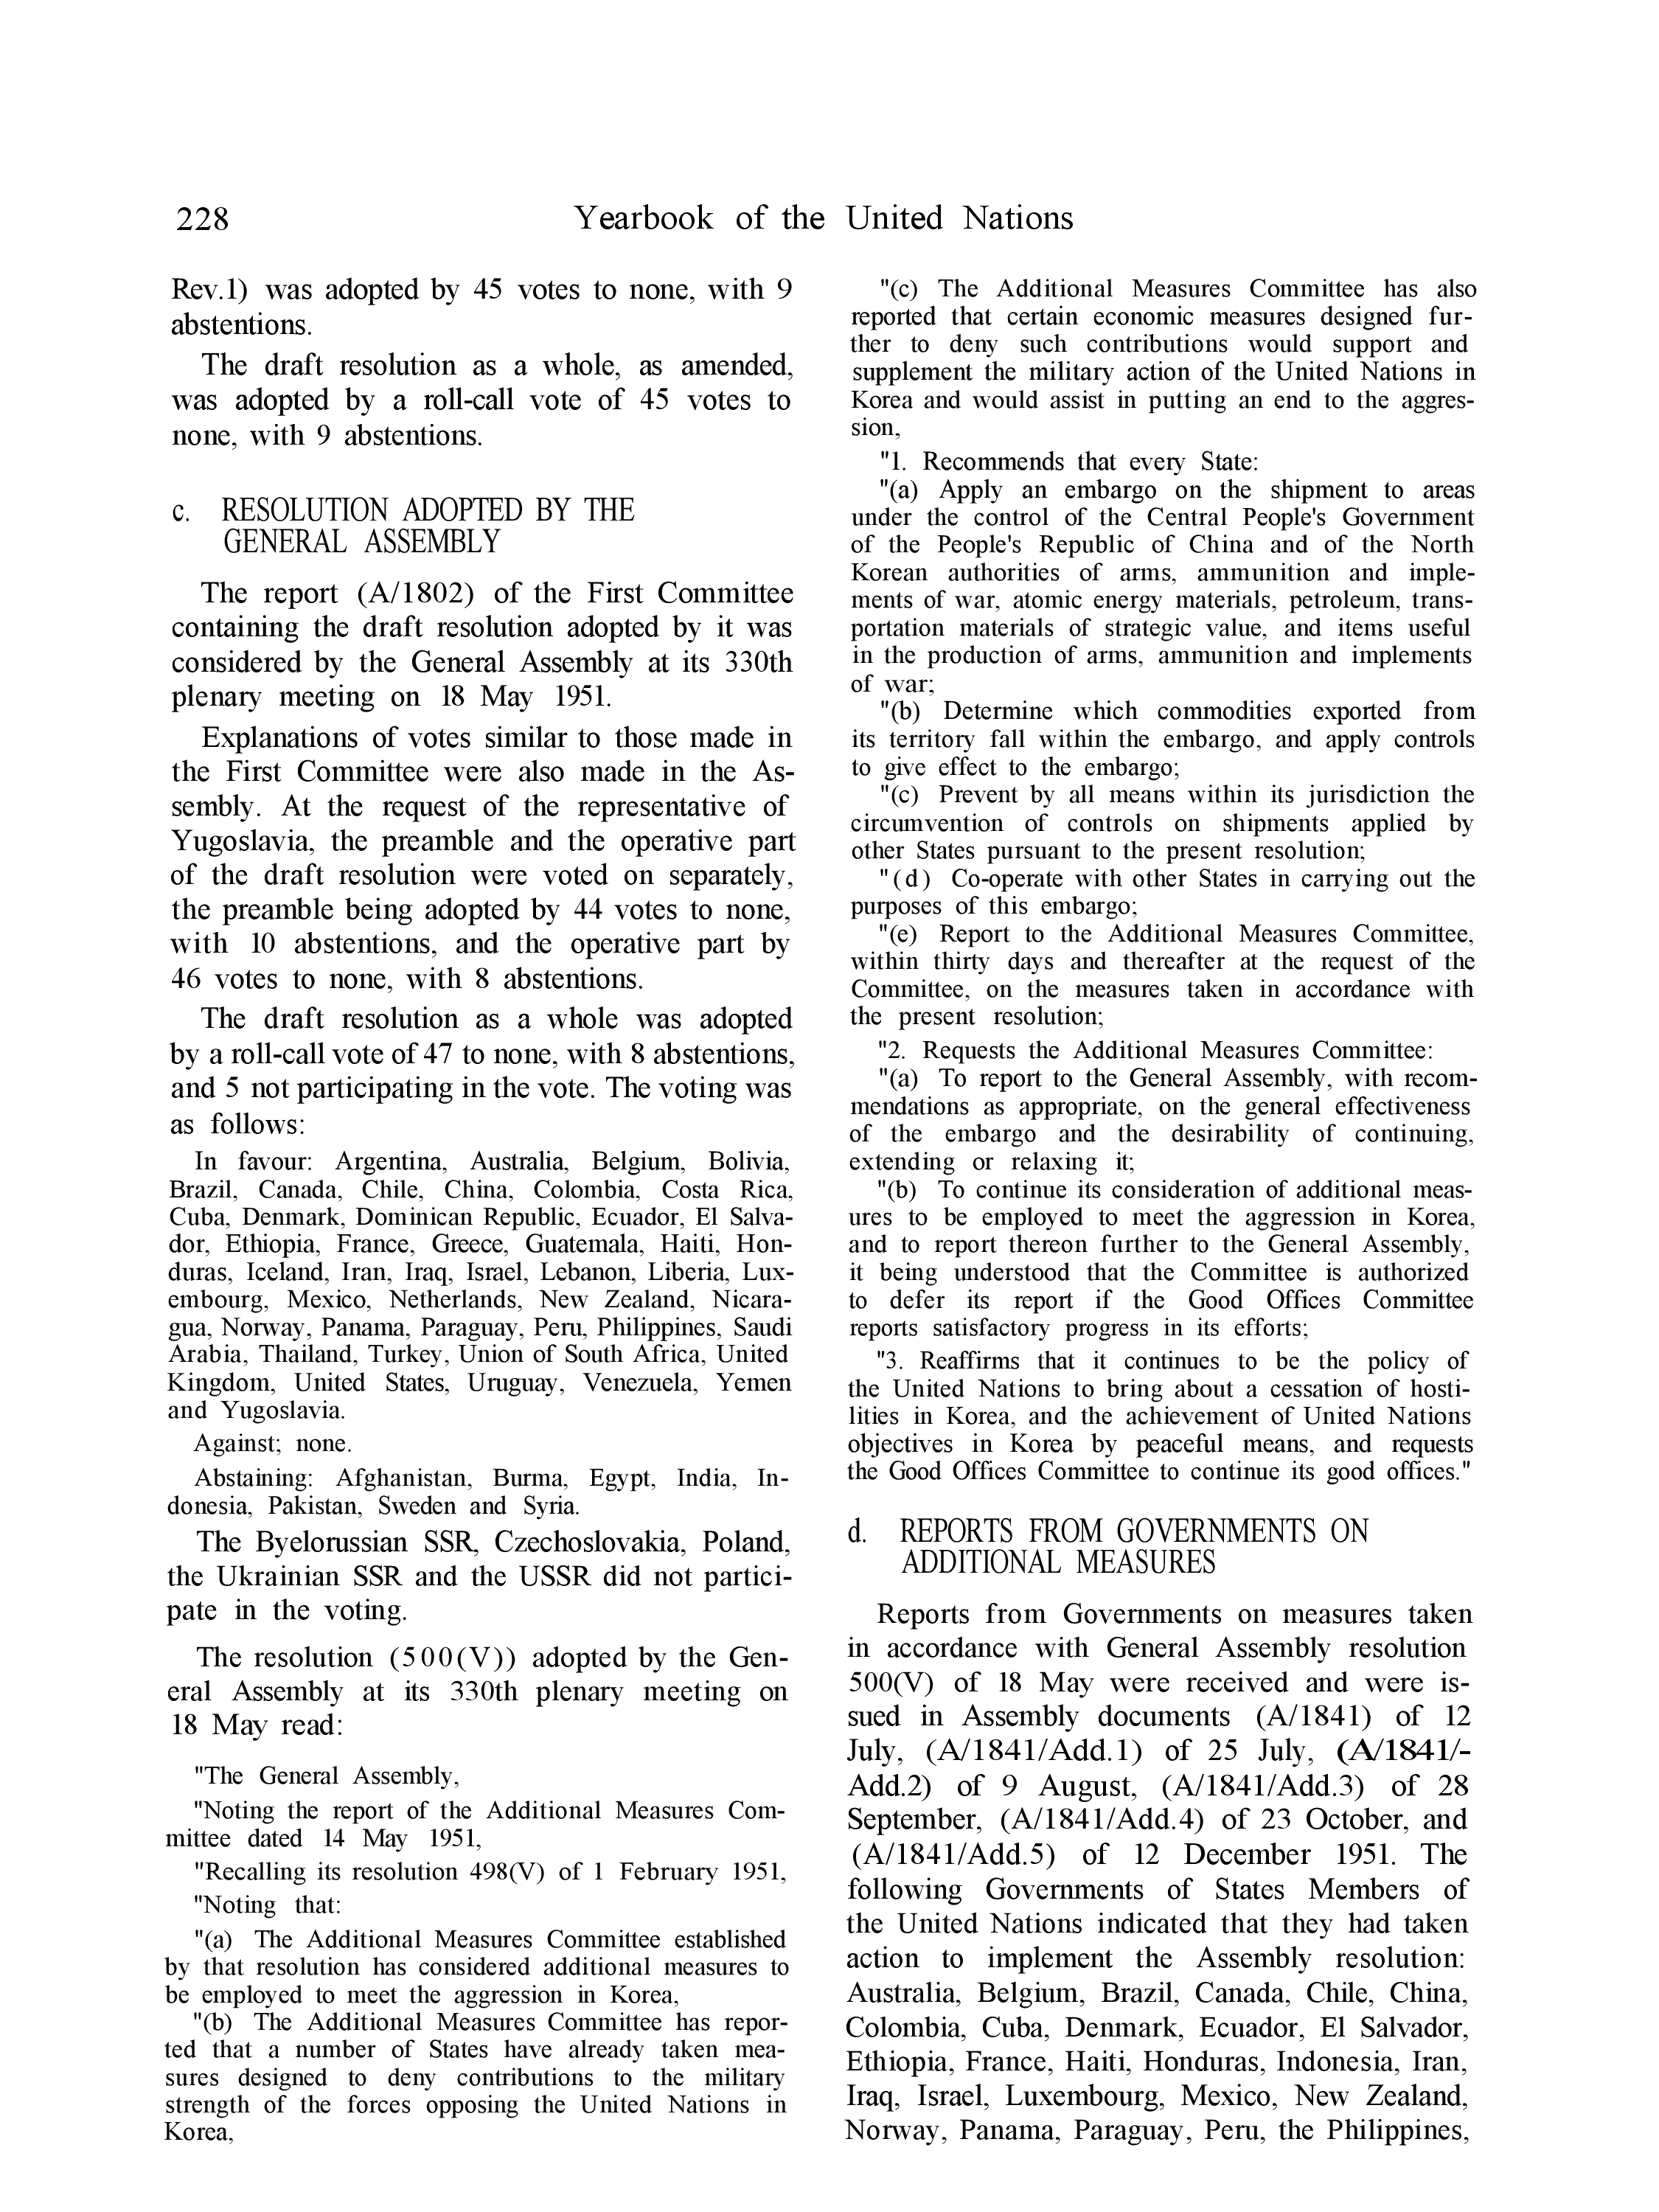 YUN Volume_Page 1951_238